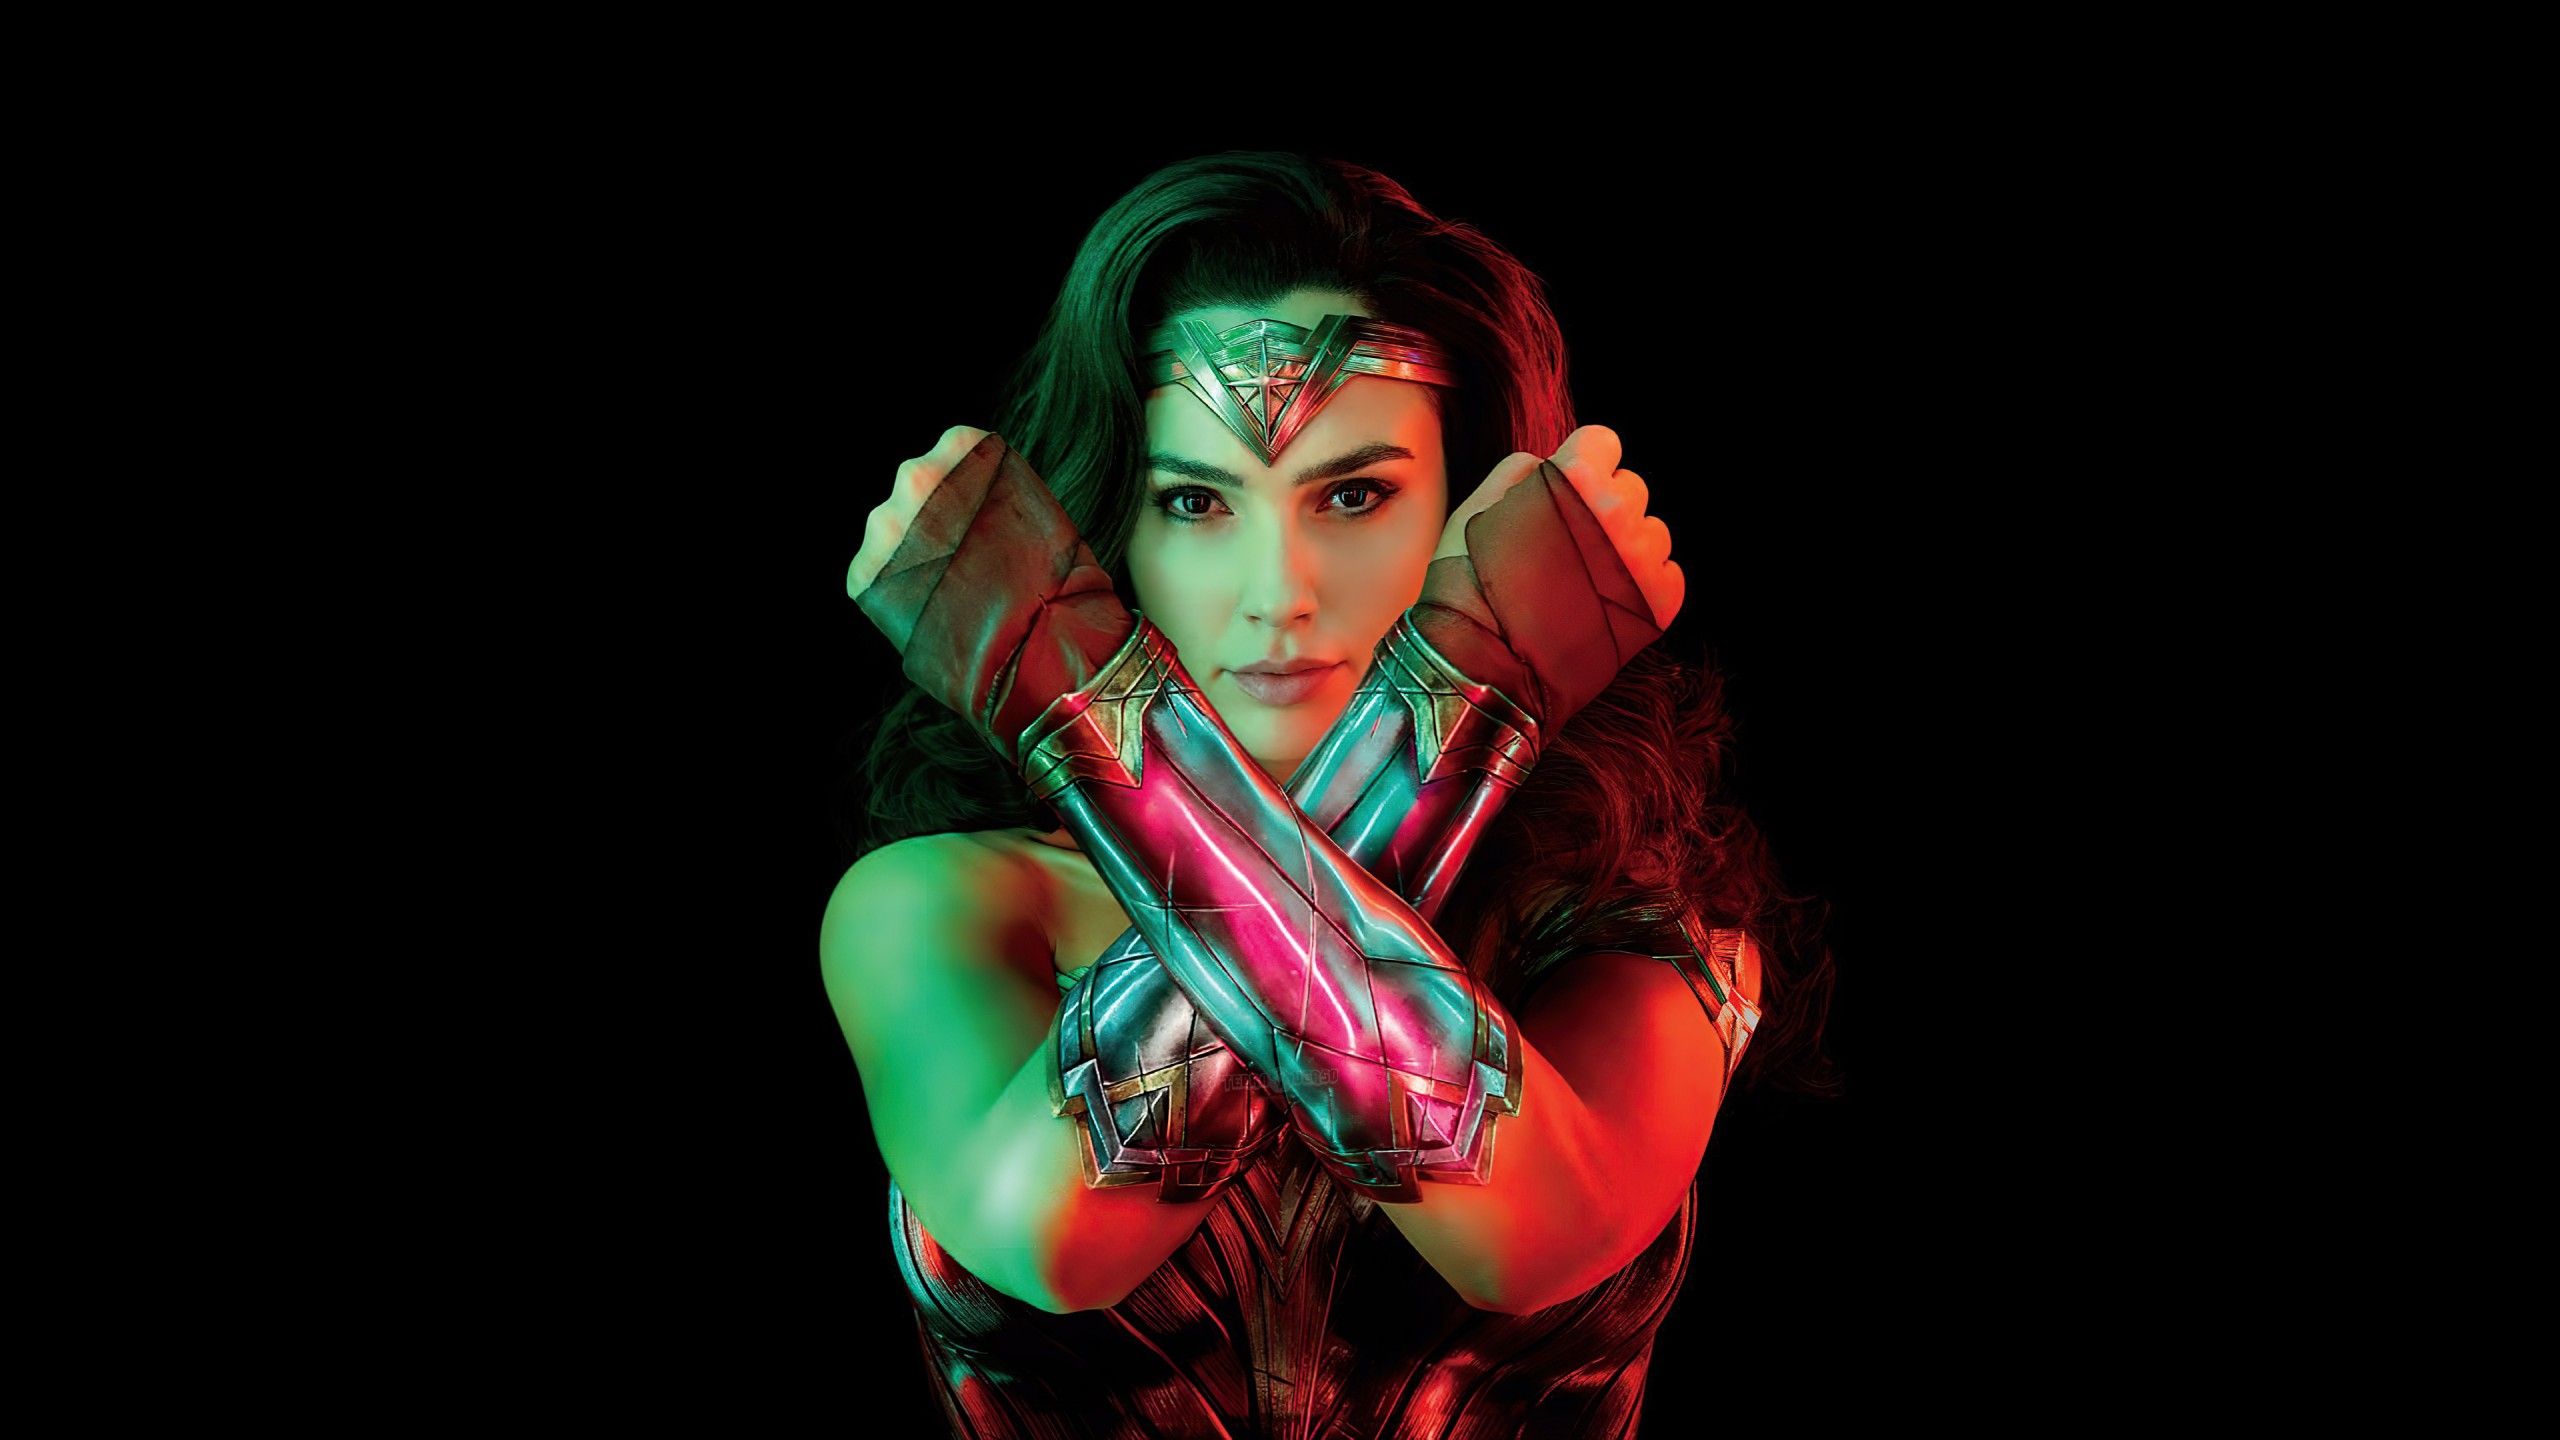 Poster Of Wonder Woman 4K Wallpapers